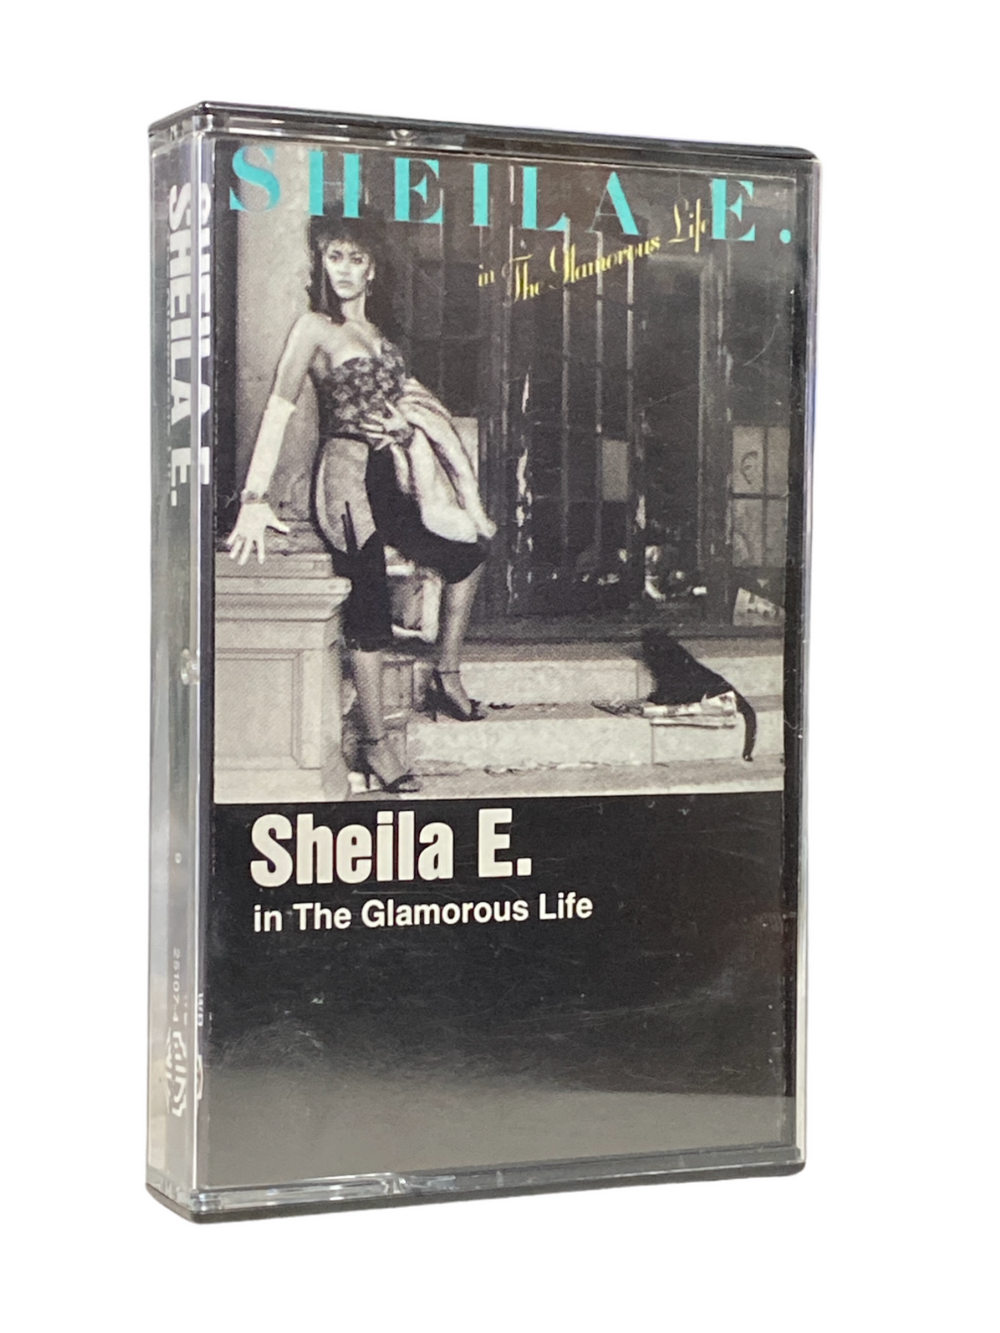 Prince – Sheila E In The Glamorous Life Original Cassette Album US Preloved: 1984